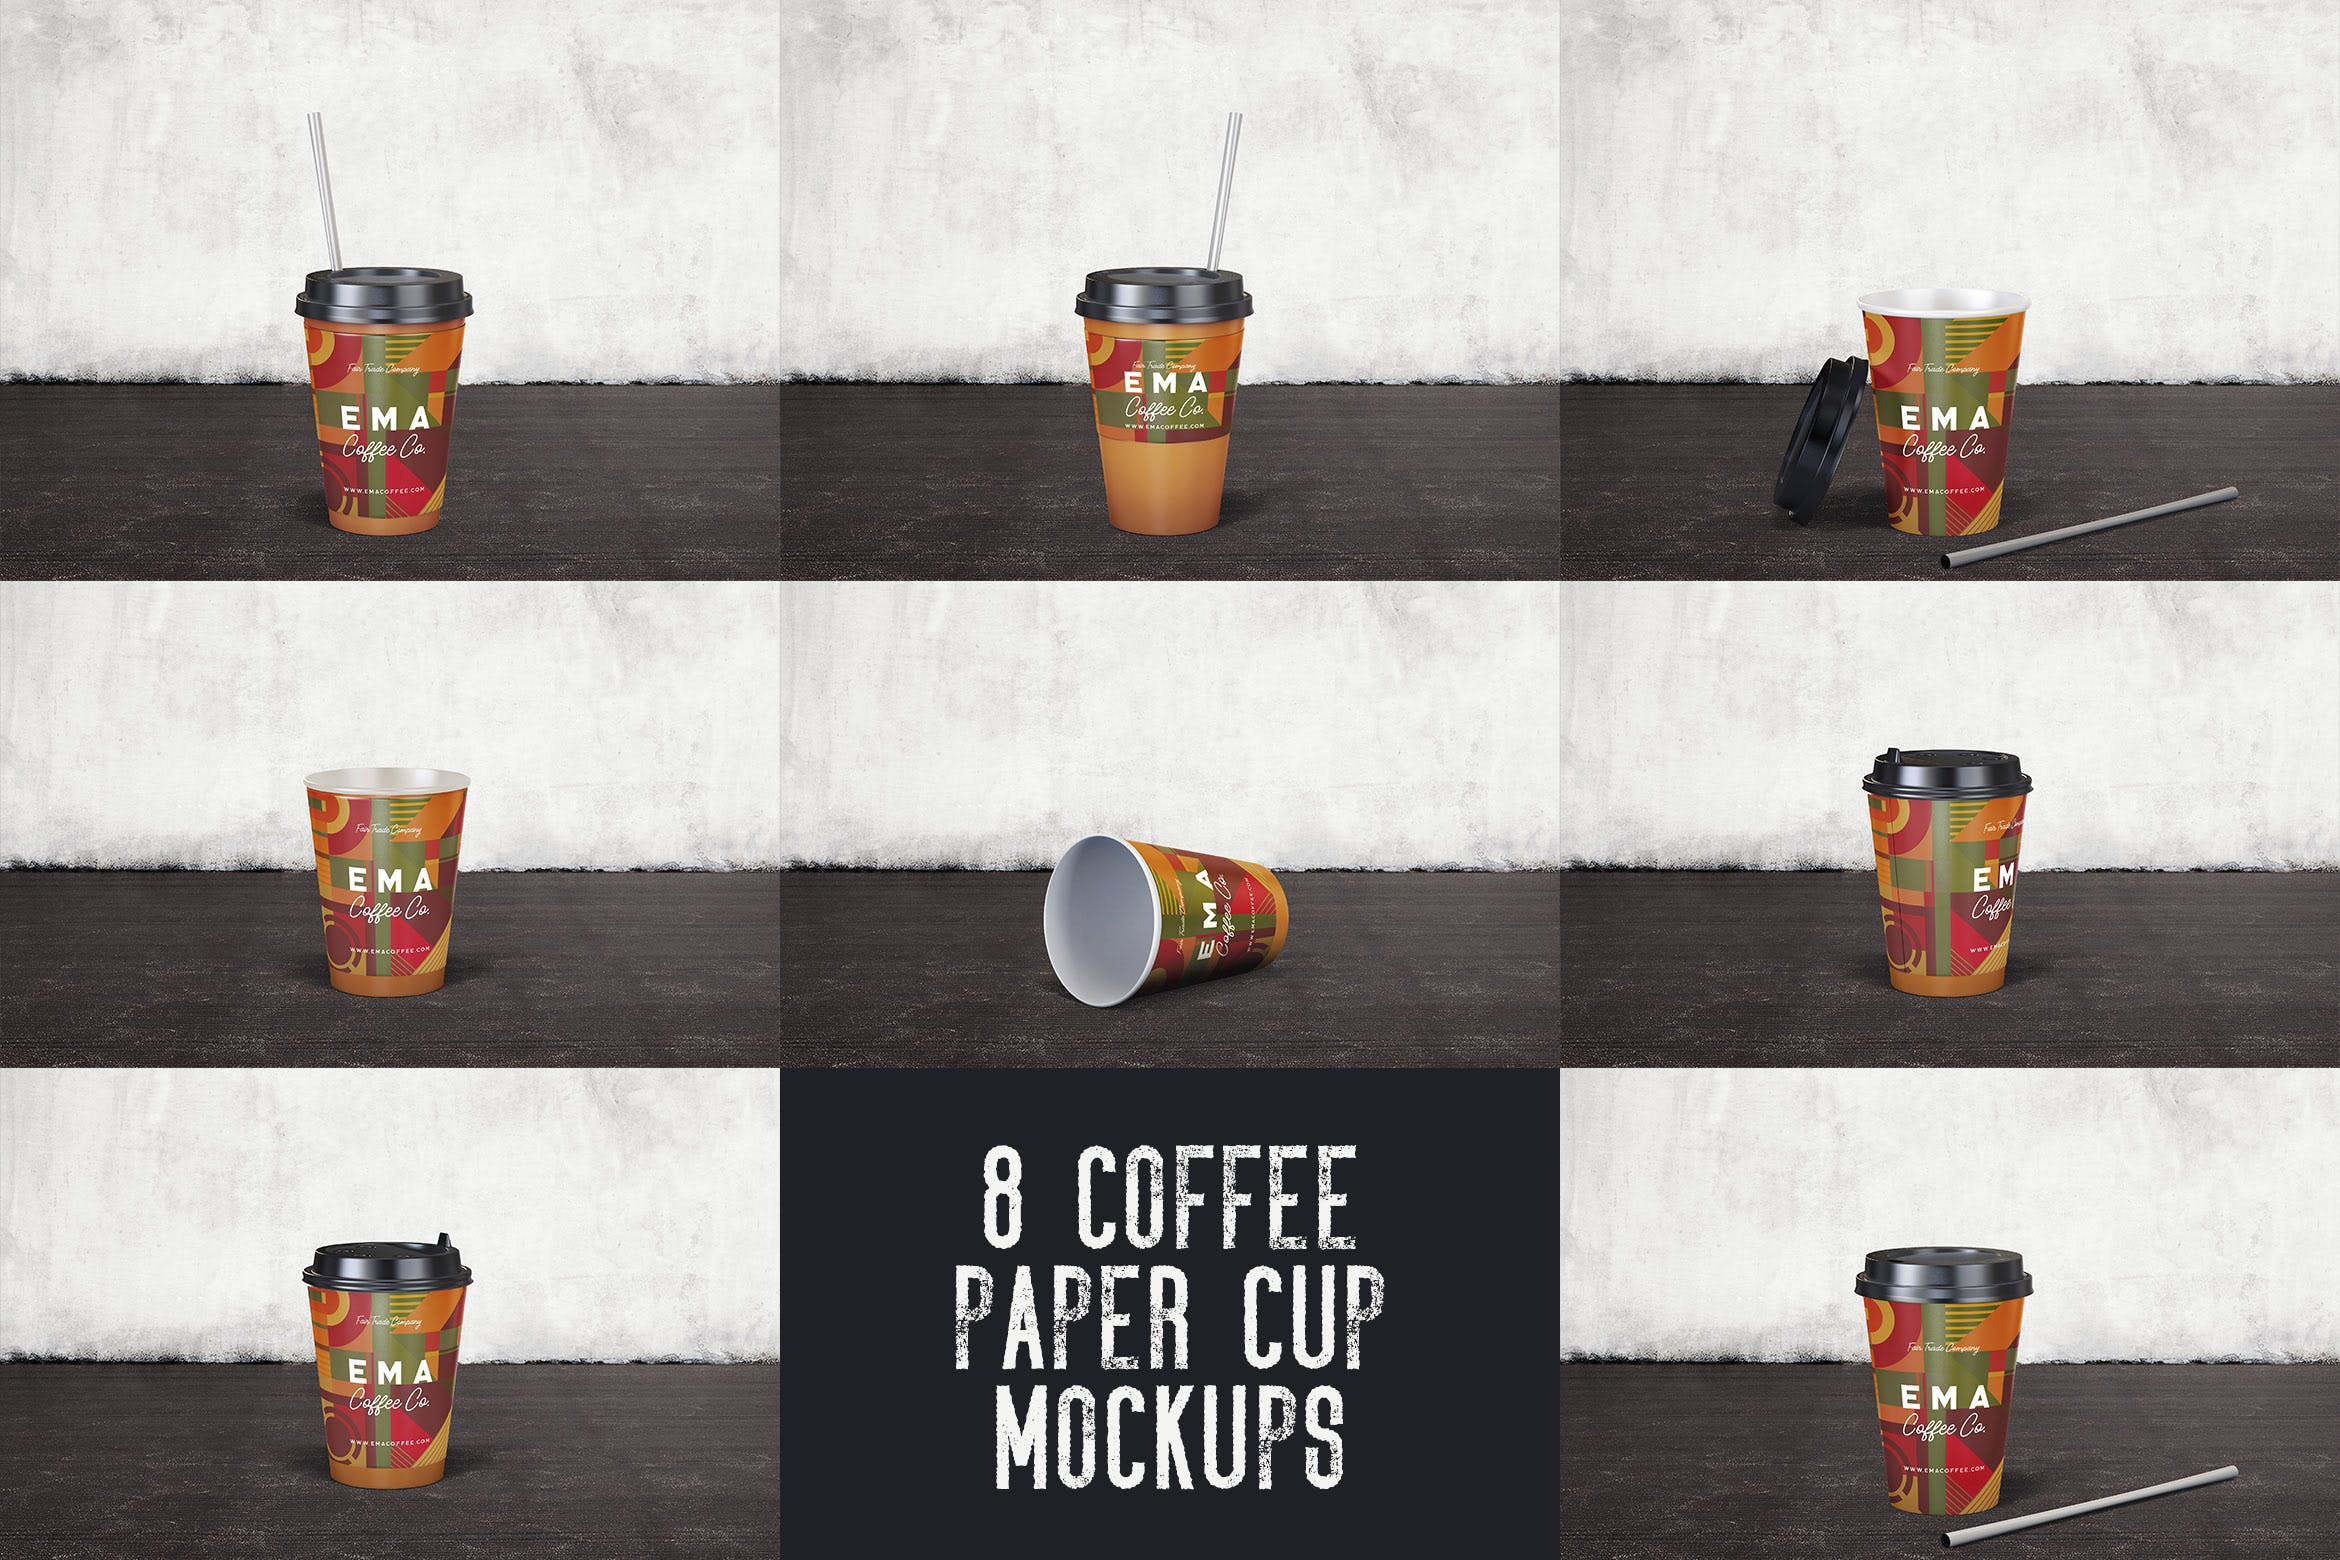 8个咖啡纸杯外观设计效果图16图库精选 8 Coffee Paper Cup Mockups插图